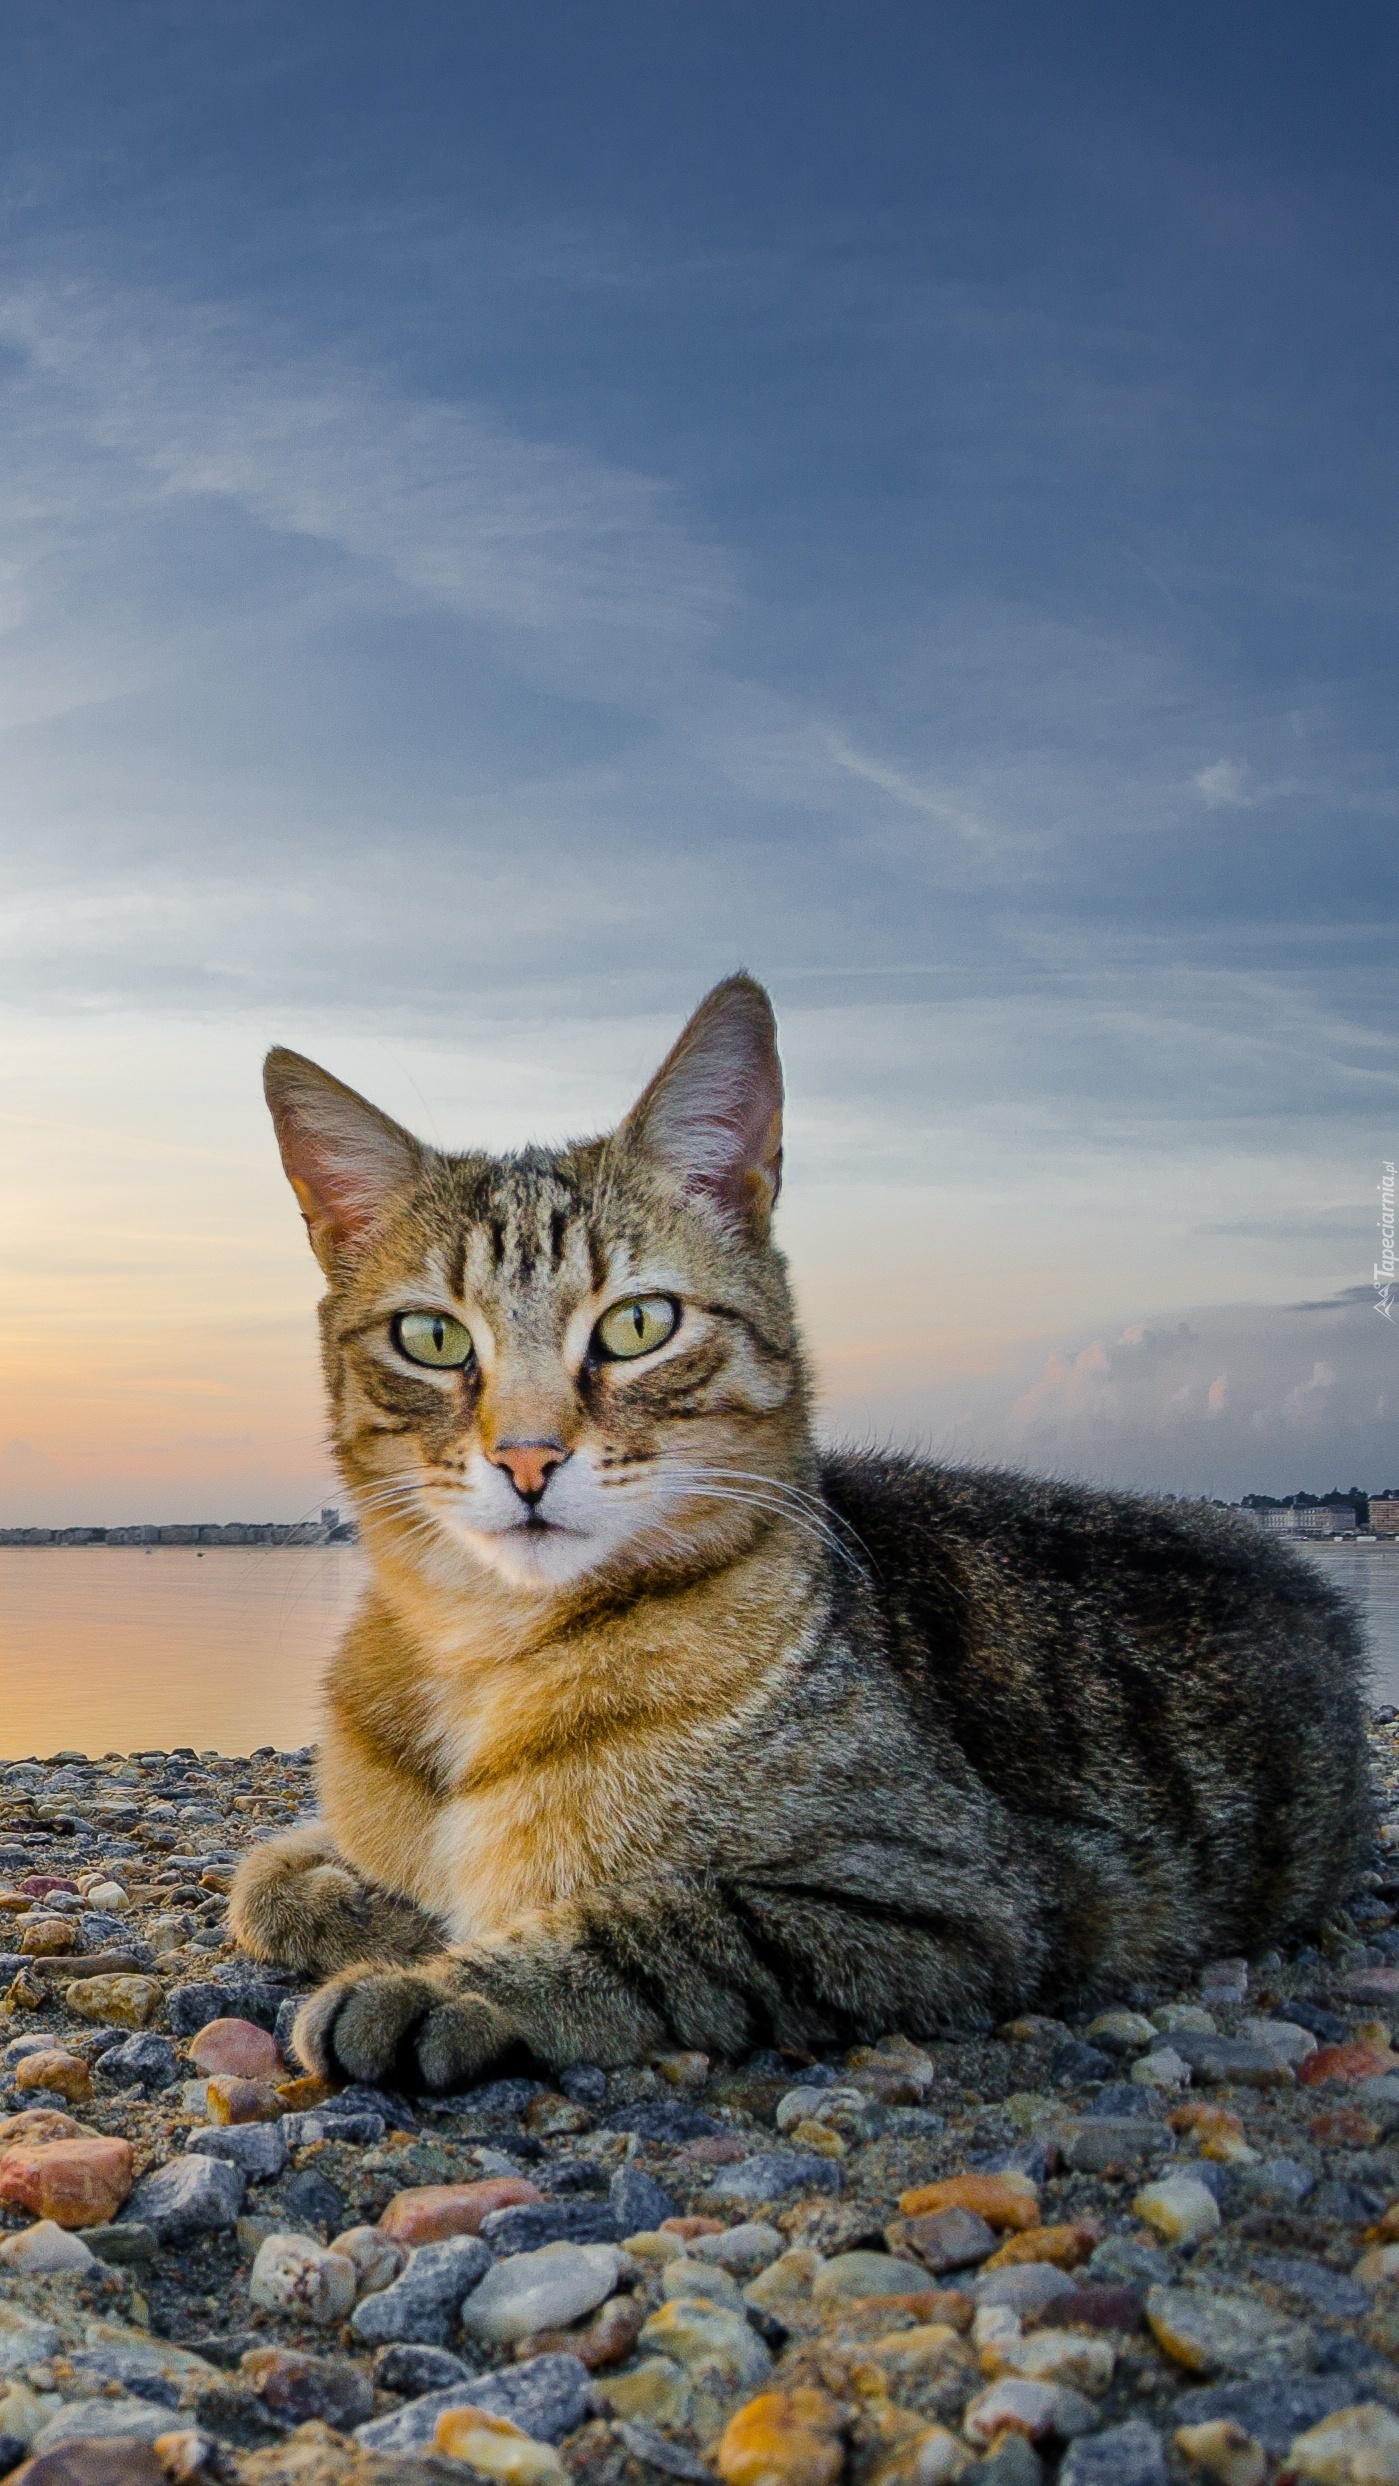 Kotek na kamienistej plaży